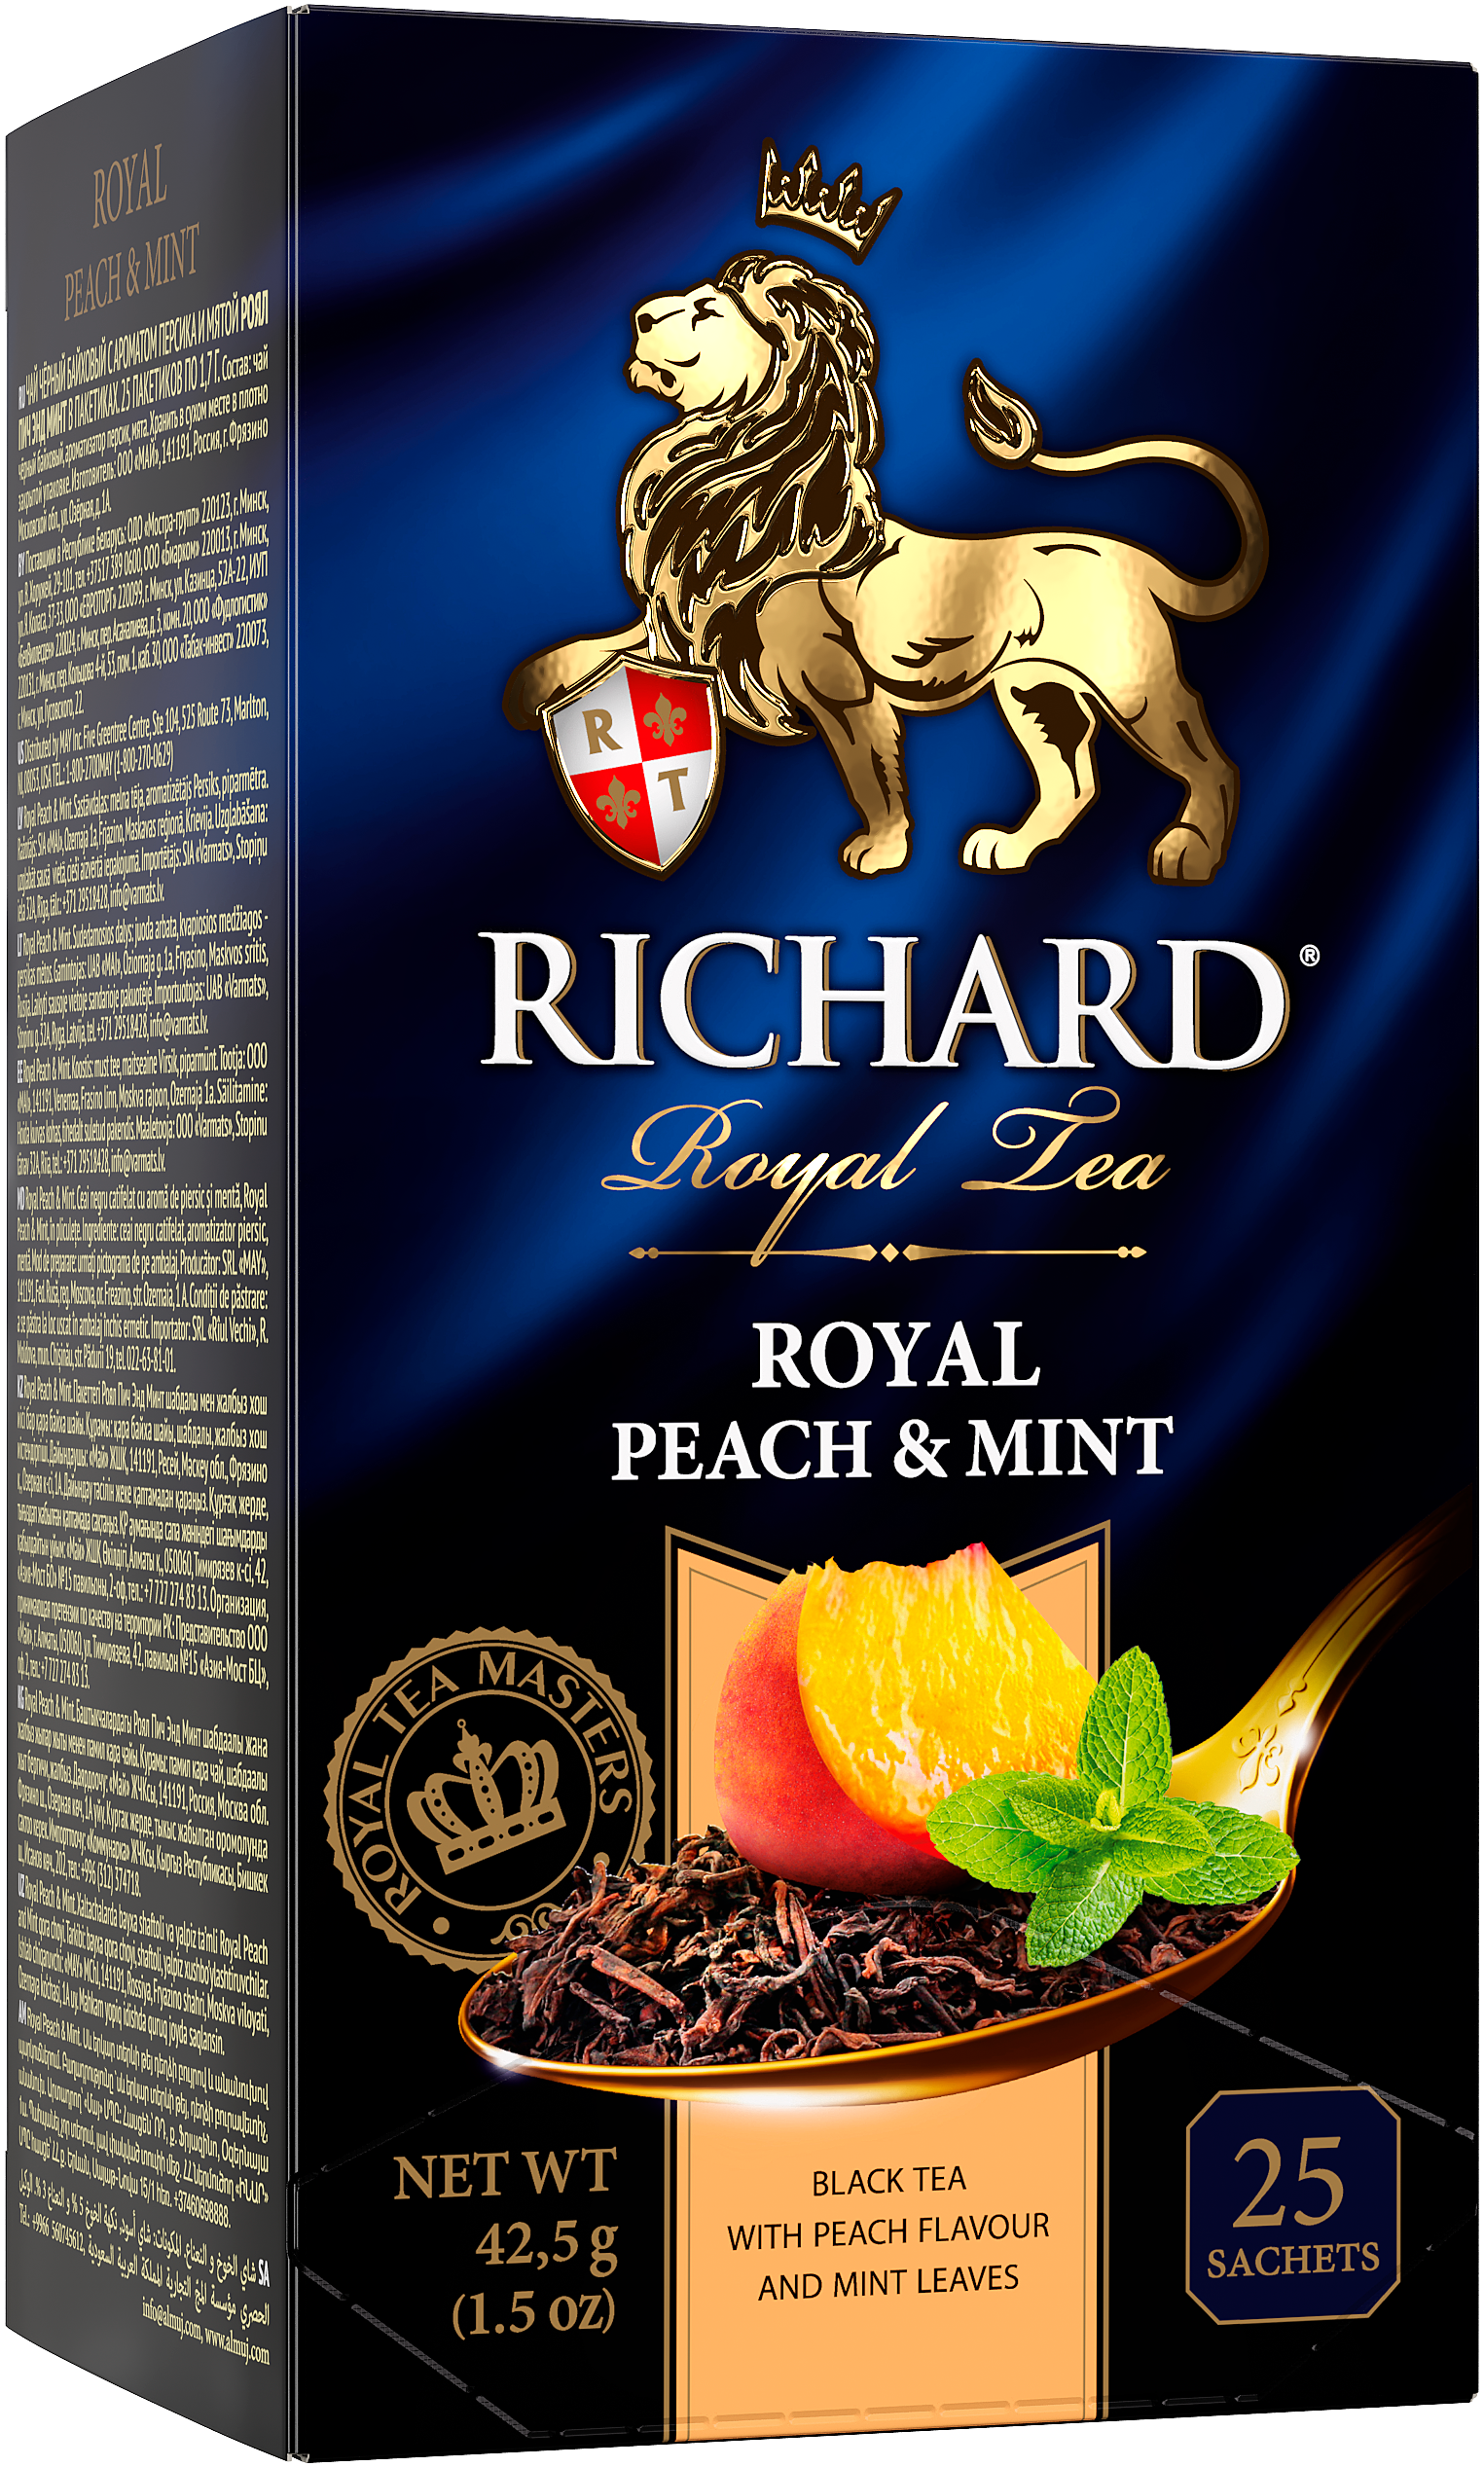 Richard "Royal Peach & Mint" black flavored tea 25 sachets, 42.5g